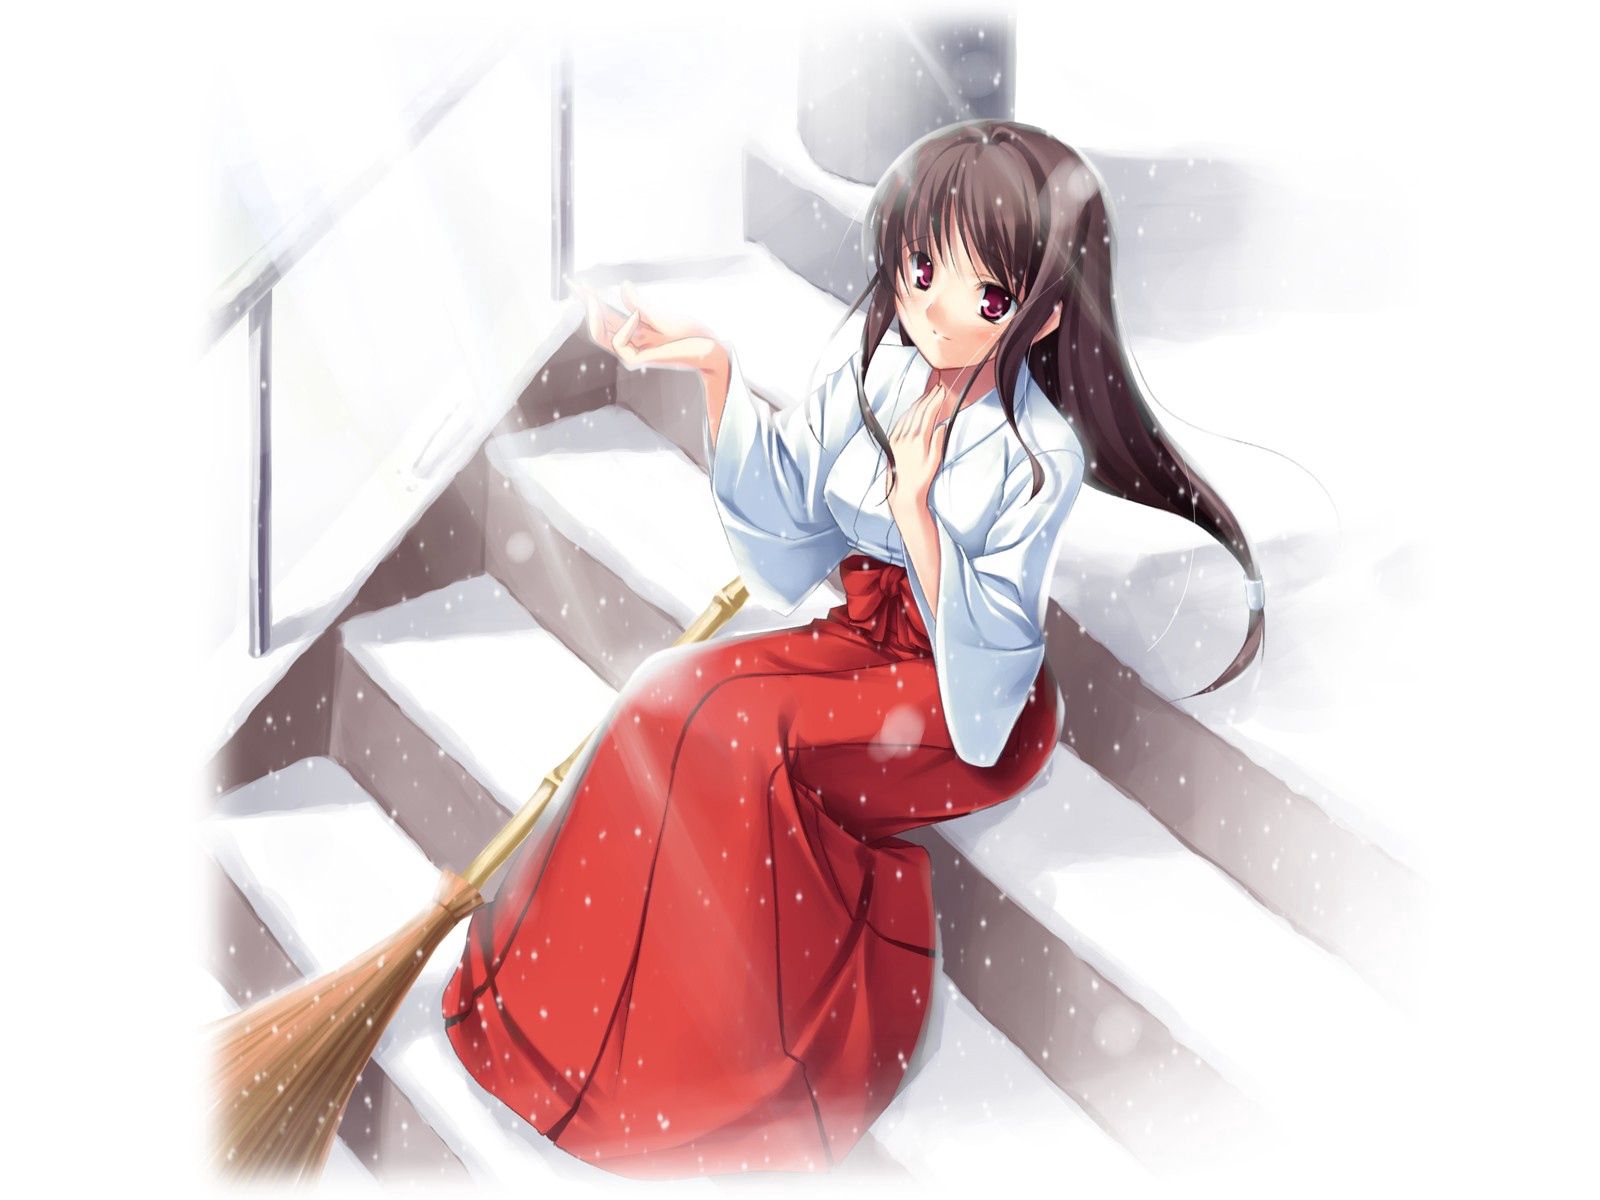 Descarga gratis la imagen Quimono, Nieve, Kimono, Muchacha, Niña, Anime en el escritorio de tu PC